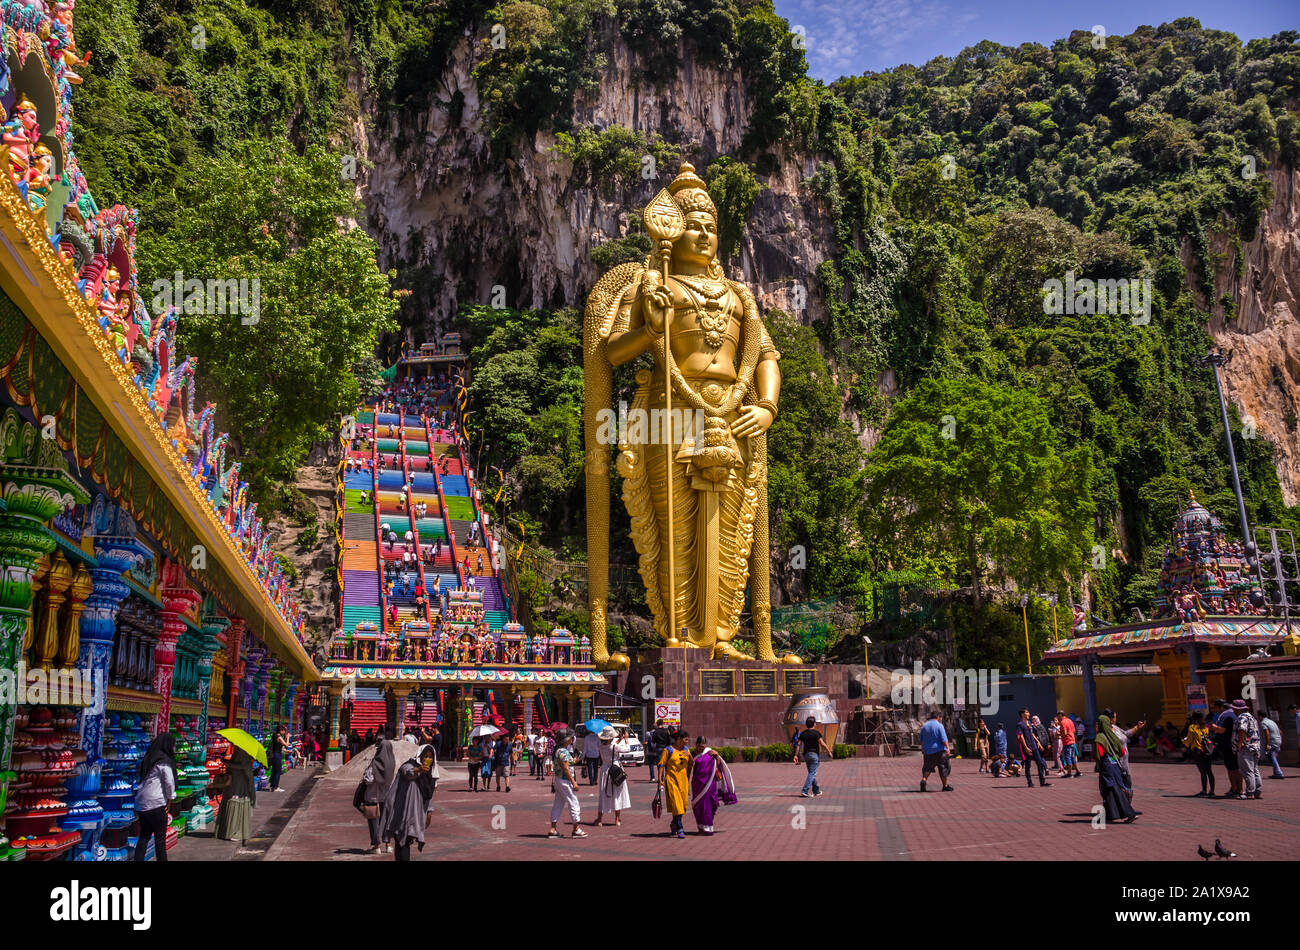 KUALA LUMPUR, MALASIA - Diciembre 18, 2018: Señor Murugan la estatua más alta, Batu cave, Malasia, dedicado a la deidad hindú Tamil Jehová Dios Murugan. Foto de stock